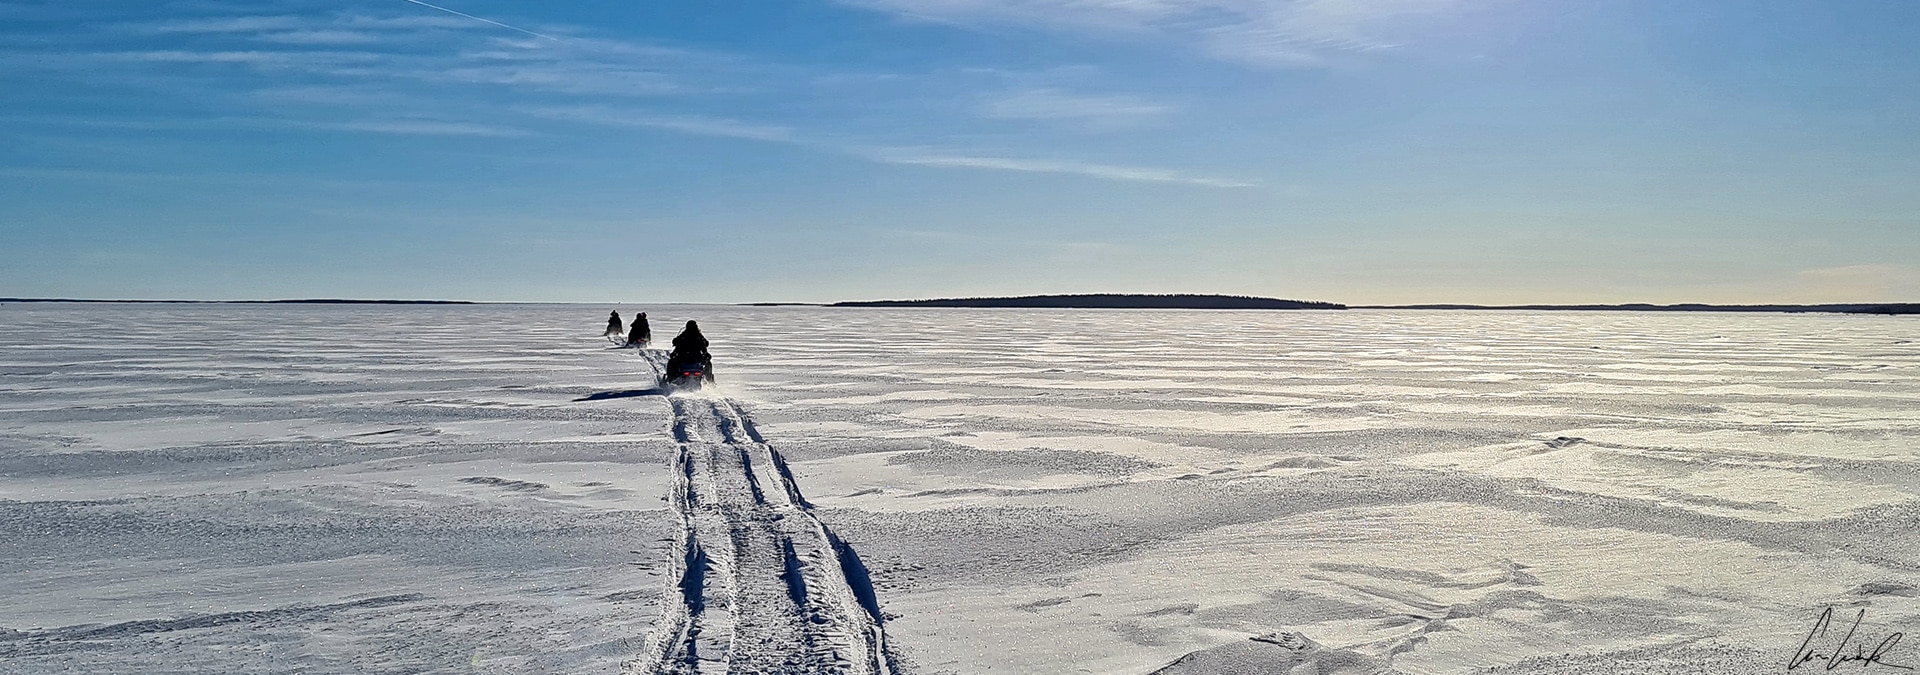 The snowmobile tour starts over a frozen sea, an enormous white expanse as far as the eye can see.